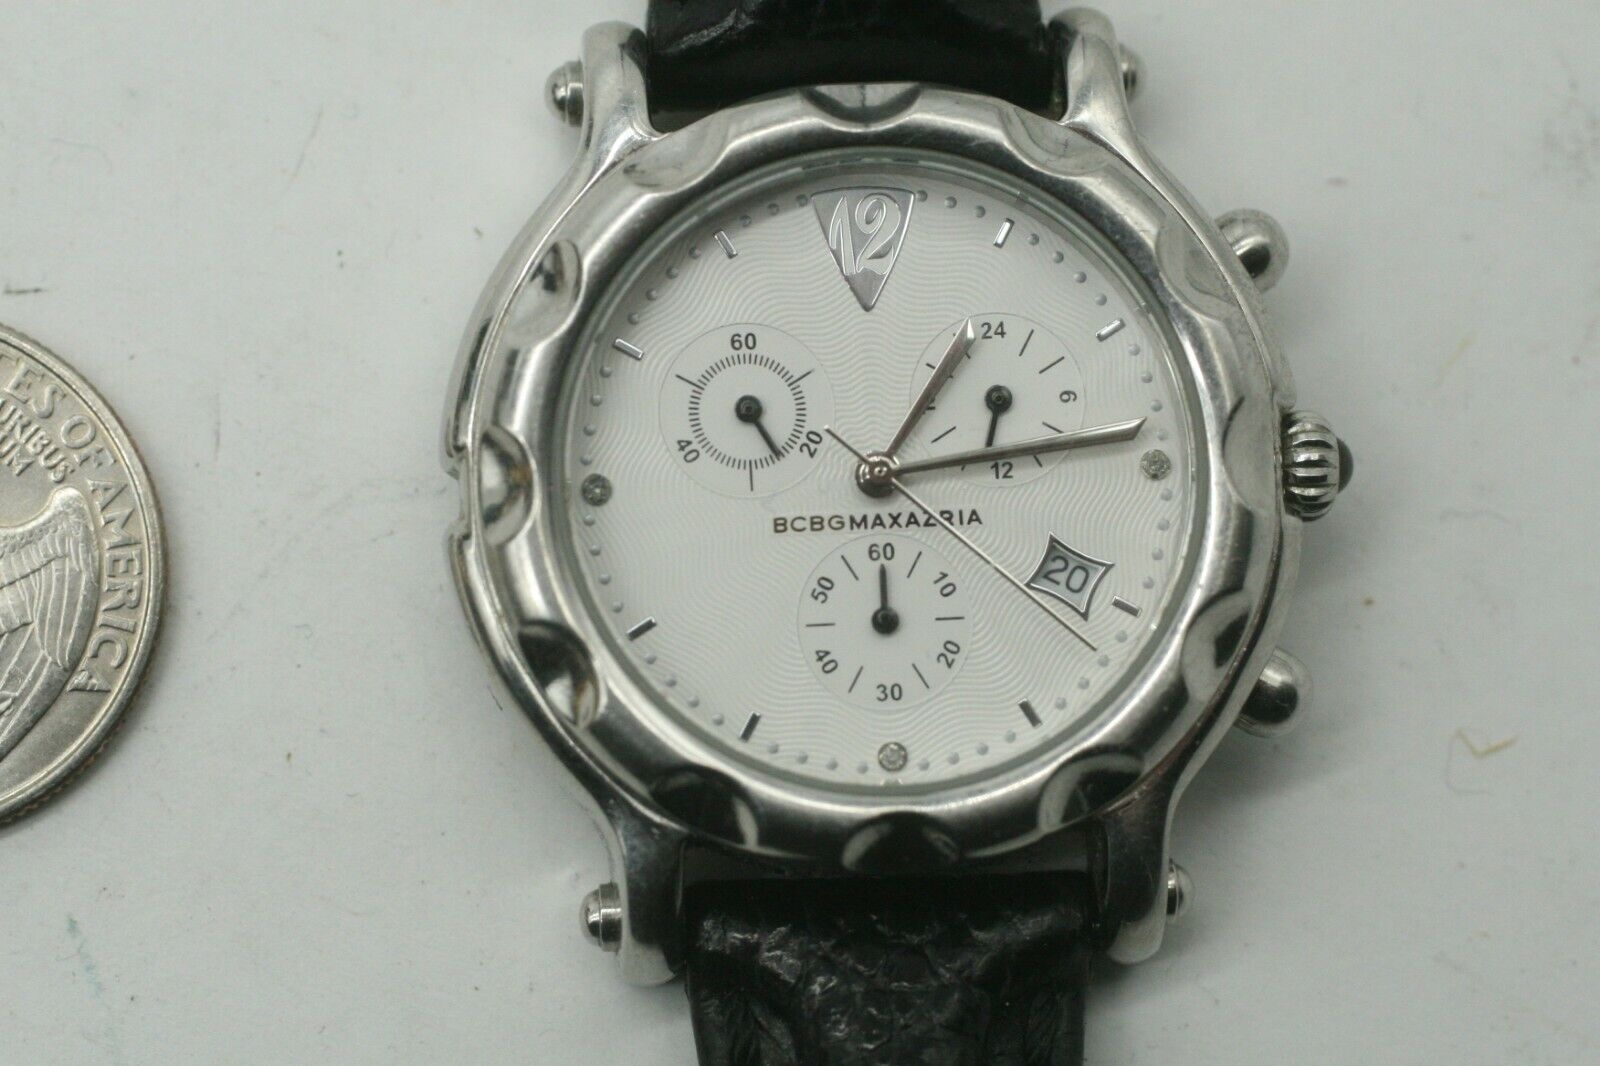 BCBGMAXAZRIA BG6043 Diamonds Quartz Analog Chronograph, Date, 3 ATM Ladies Watch